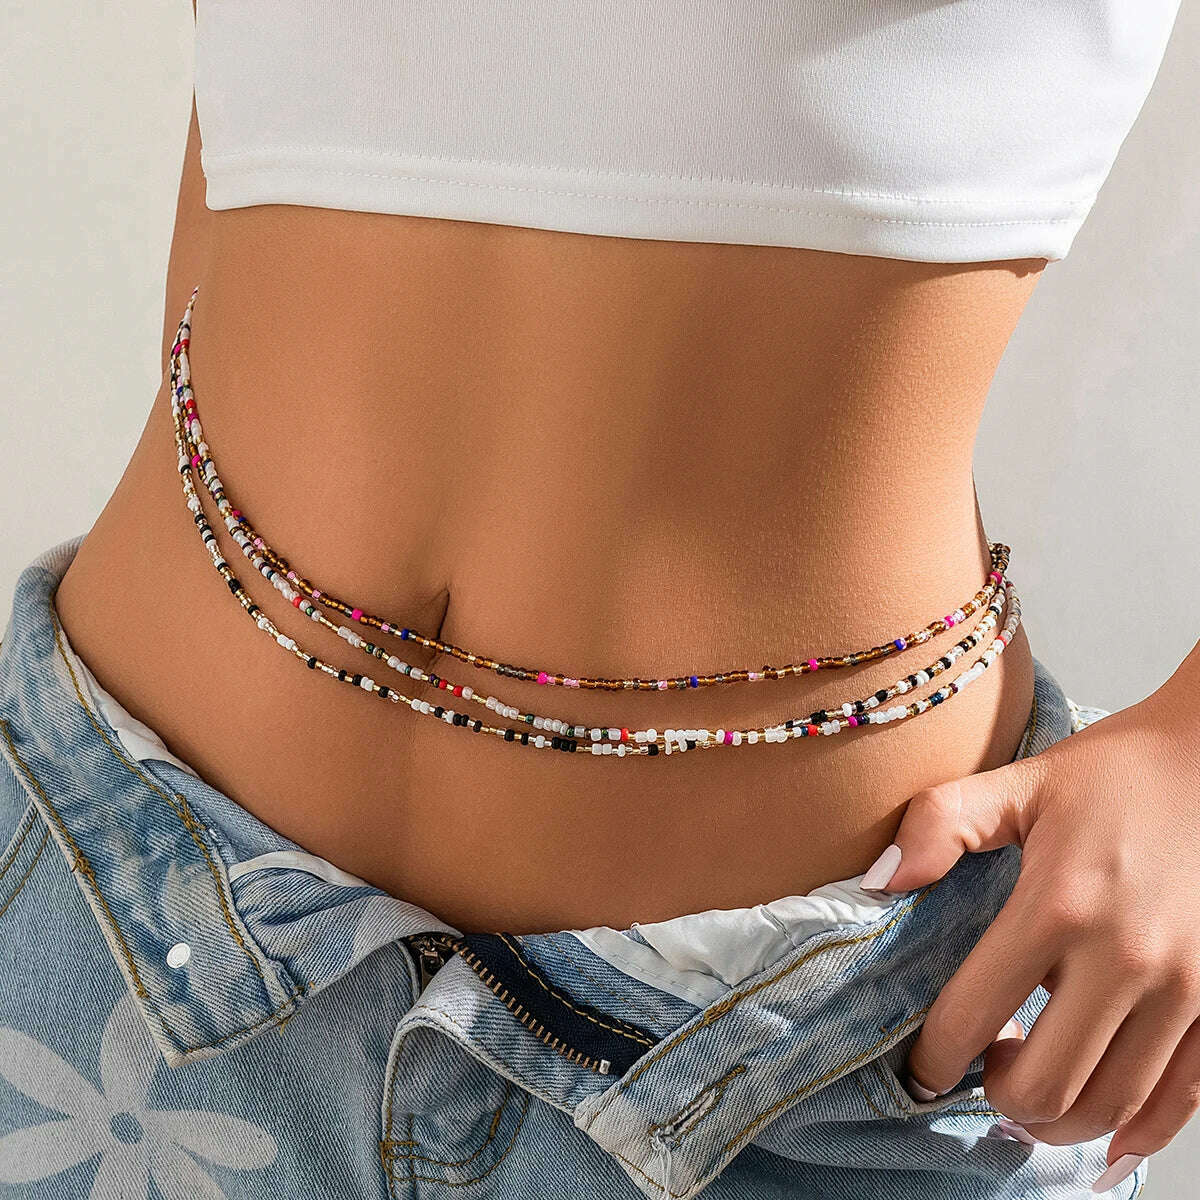 KIMLUD, Ingemark 3Pcs/Set Boho Elastic Seed Beads Waist Belly Belt Chains Women Summer Bikini Sexy Aesthetic Body Jewelry Accessories, Style 2, KIMLUD Womens Clothes